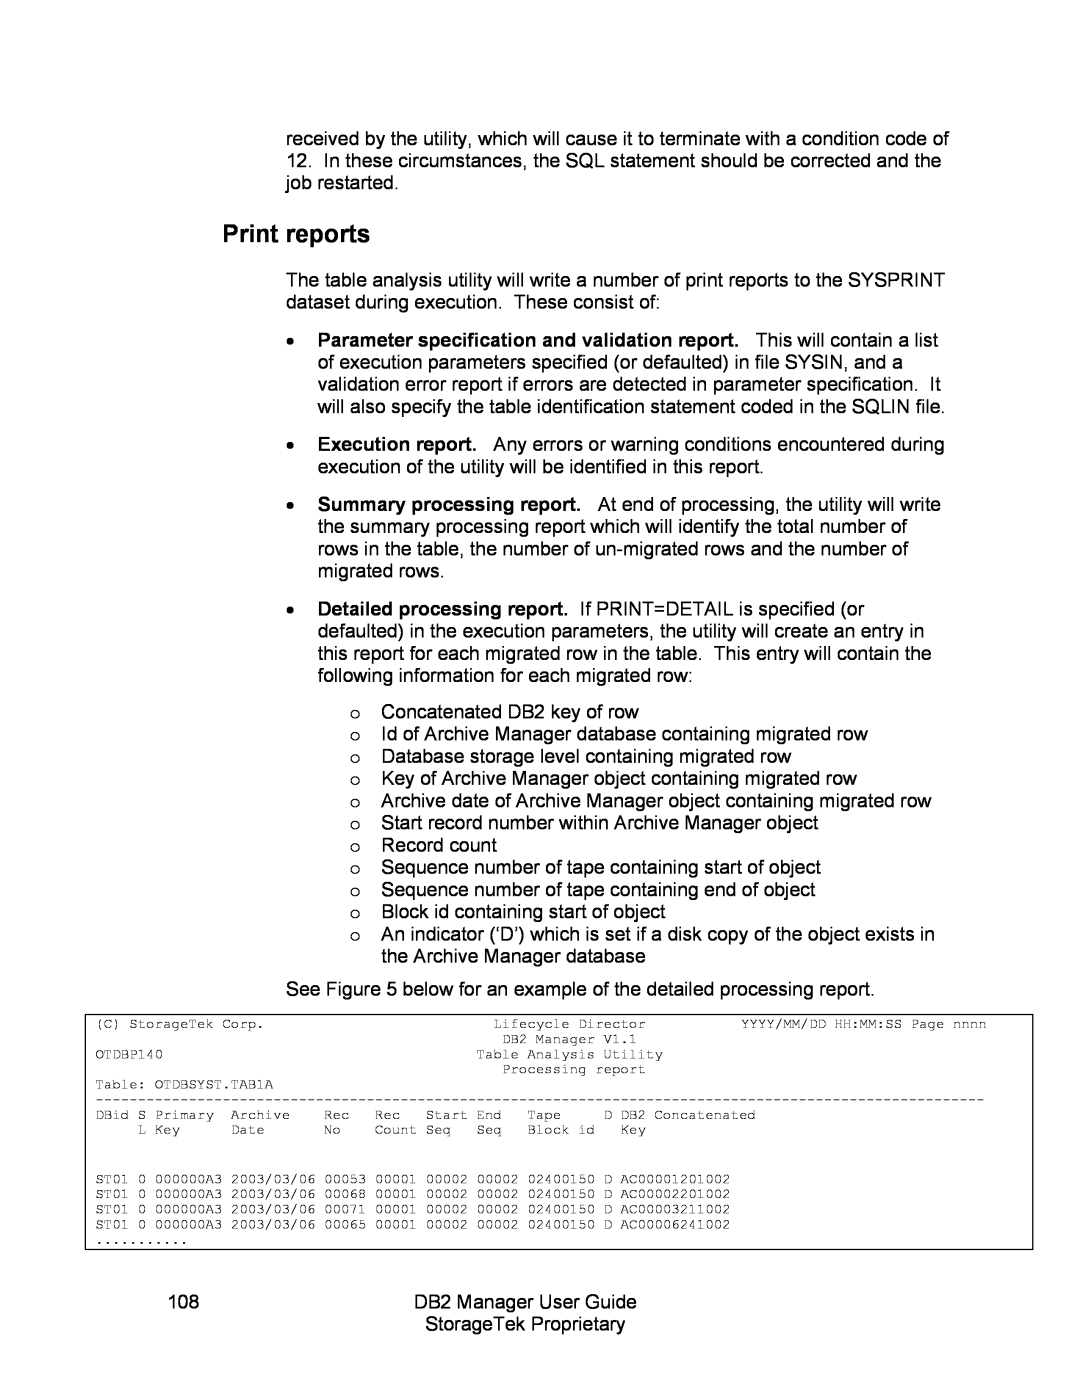 StorageTek 312564001 manual Print reports, oConcatenated DB2 key of row 